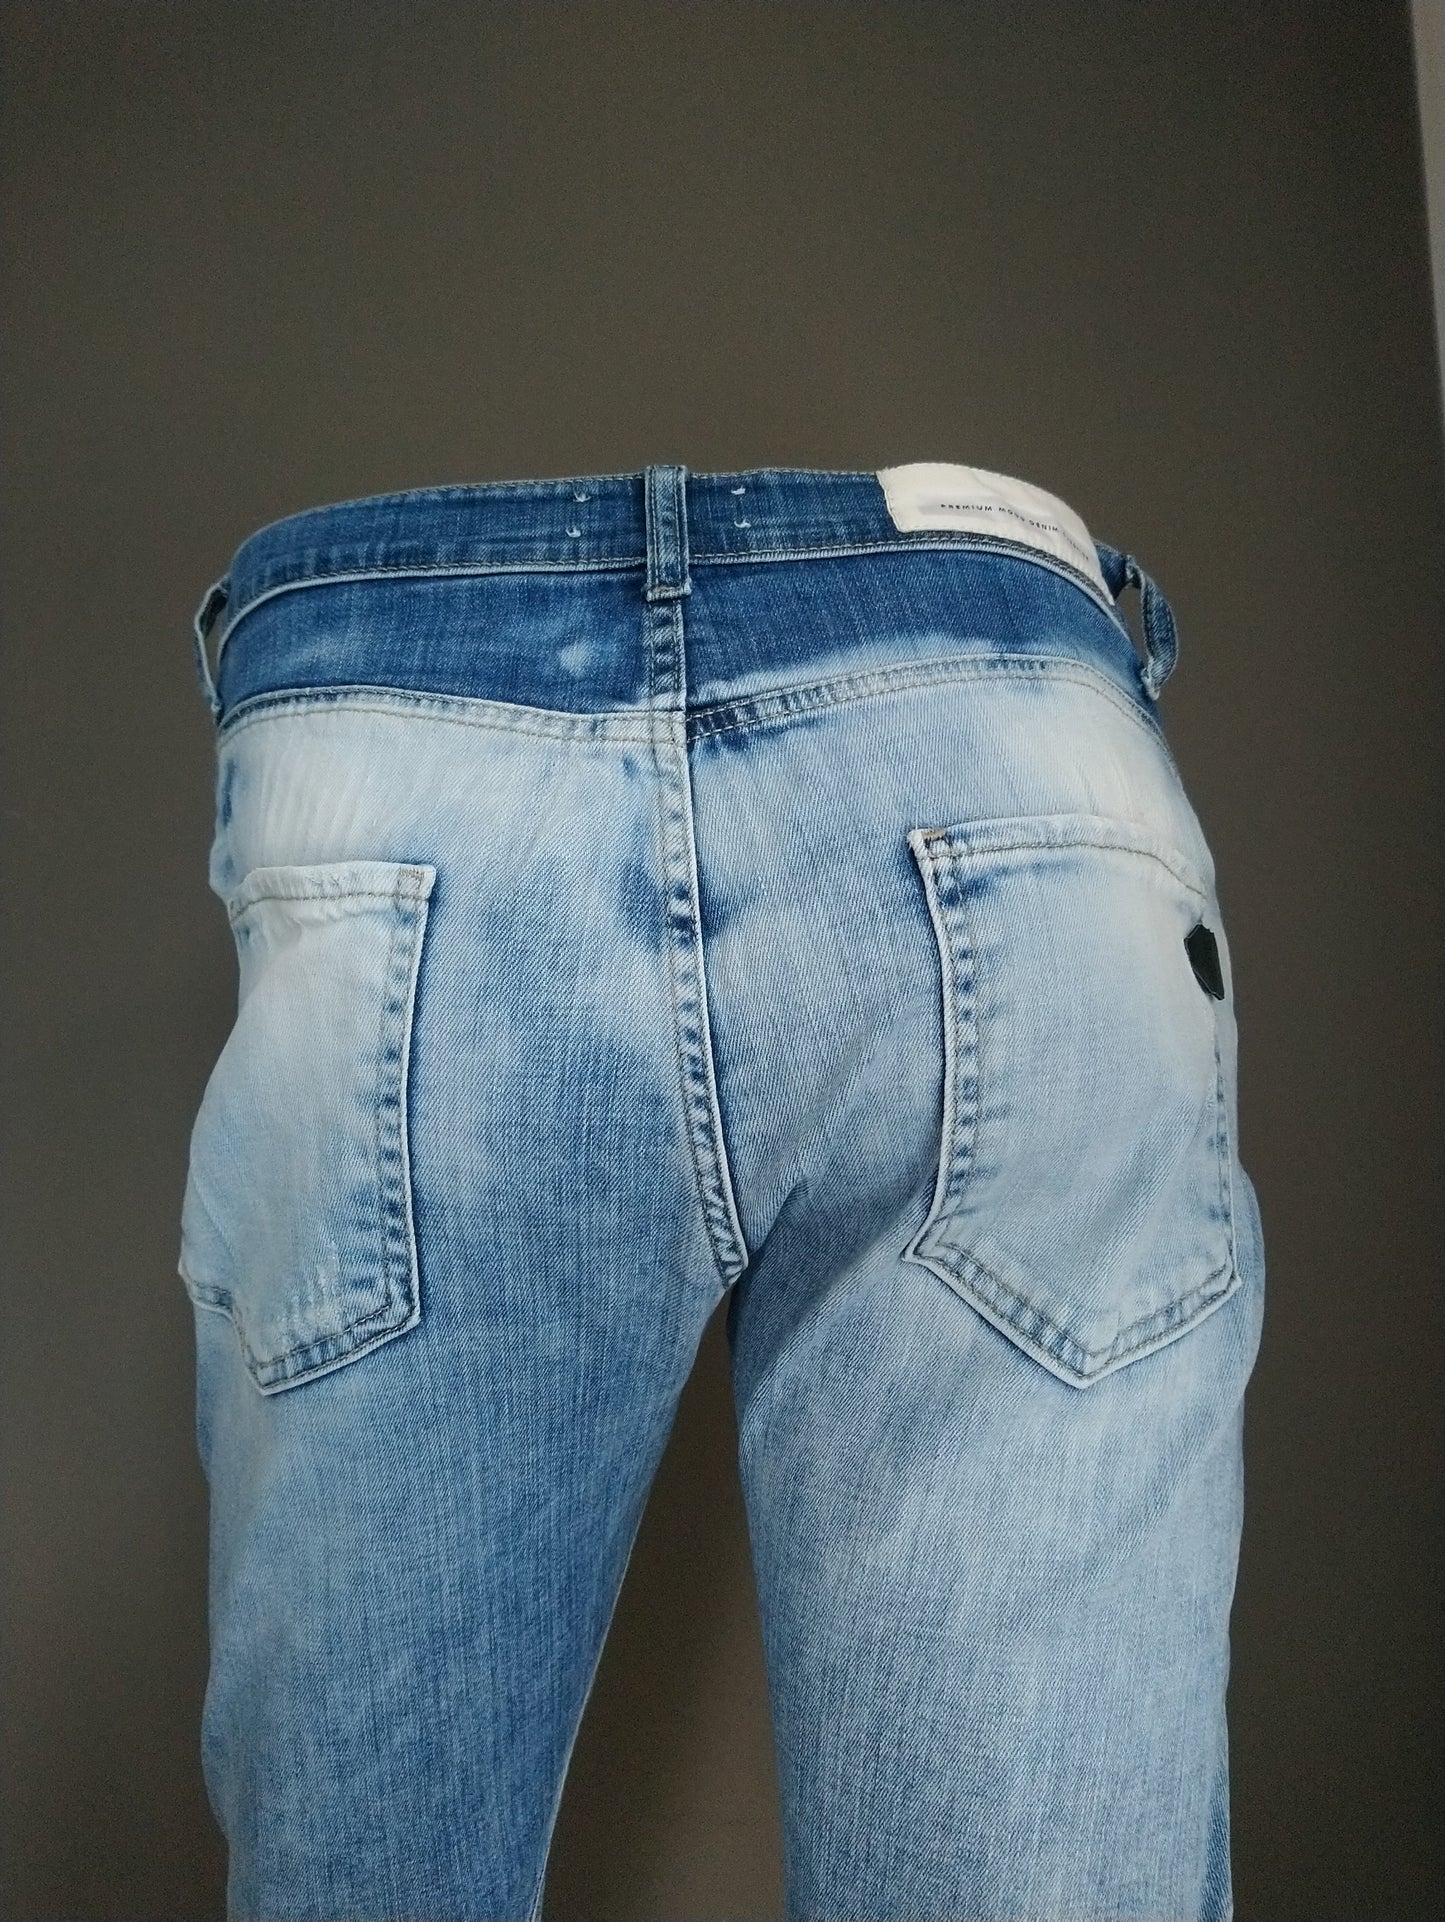 PMDS (Premium Mood Denim Superior) Jeans. Light blue colored. Size W32-L30. Stretch.